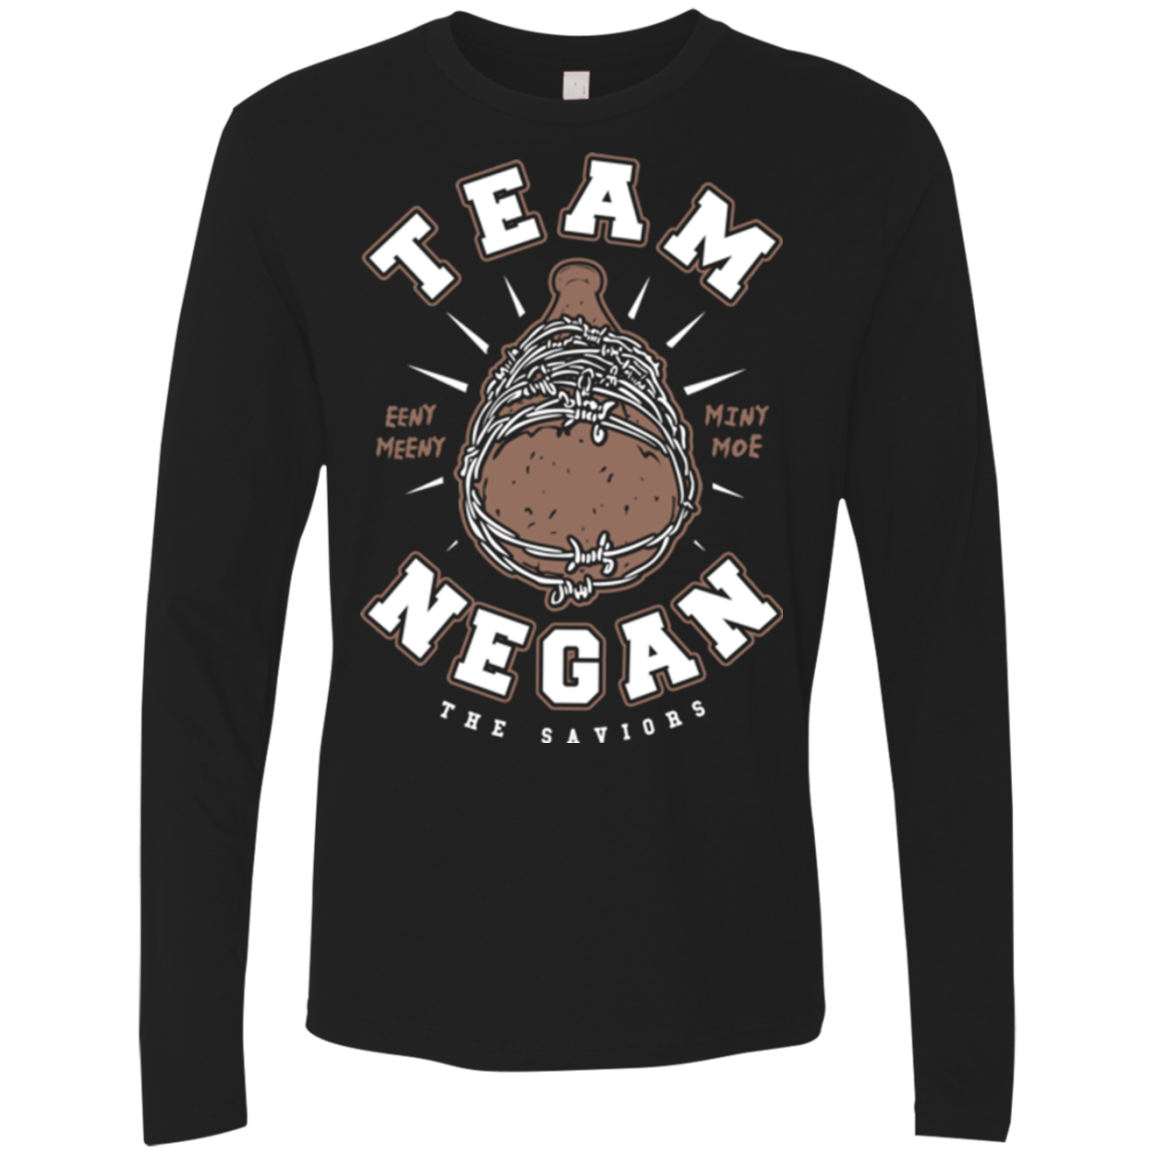 T-Shirts Black / Small Team Negan Men's Premium Long Sleeve